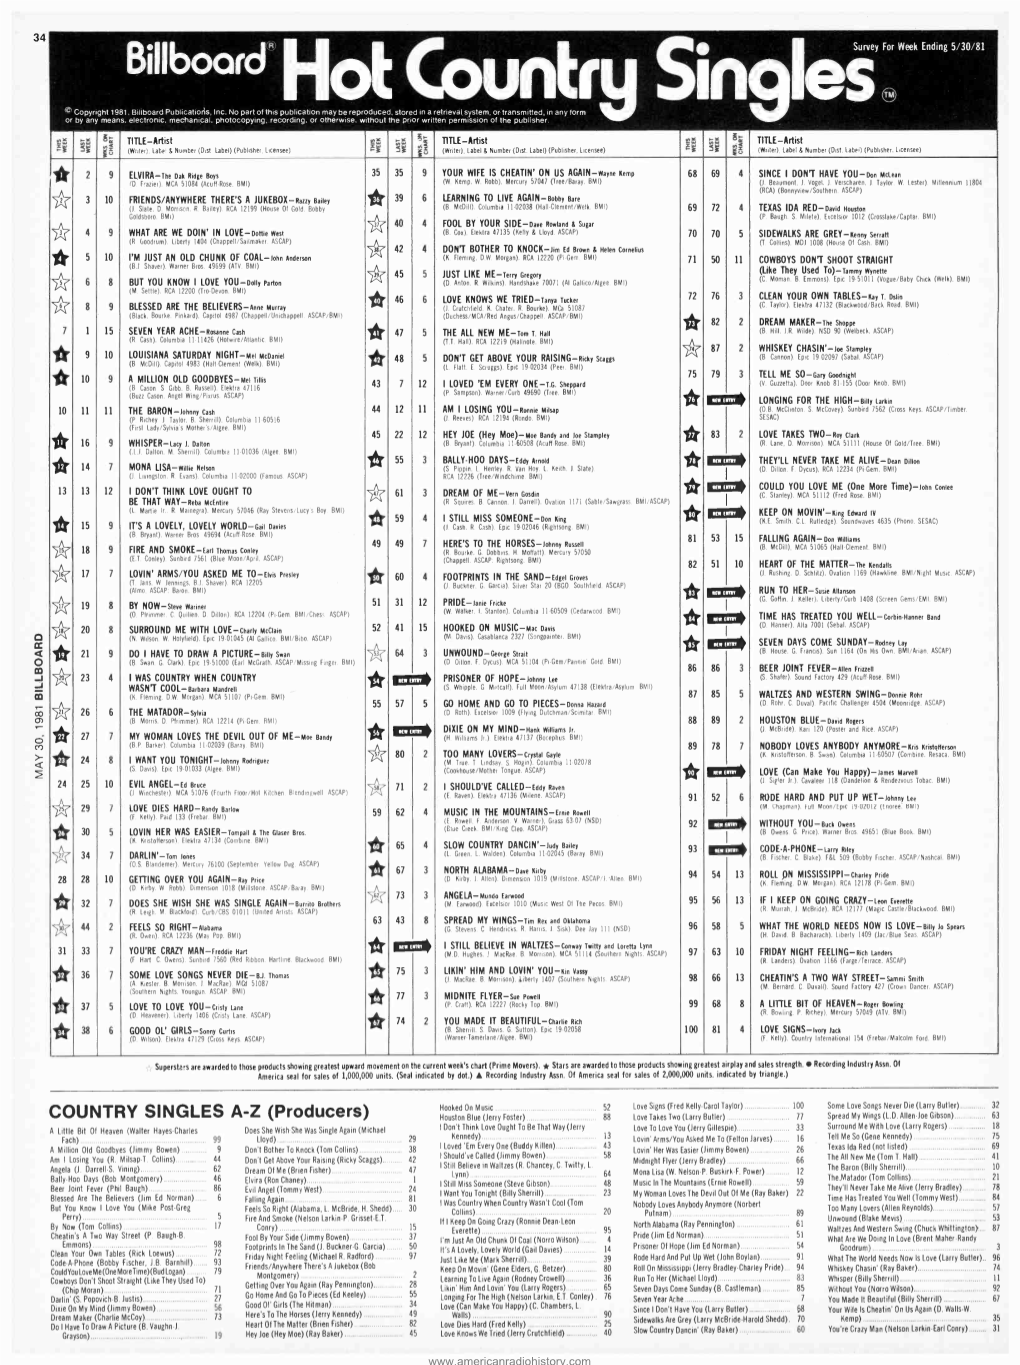 Singles TM C Copyright 1981 Billboard Publications, Inc